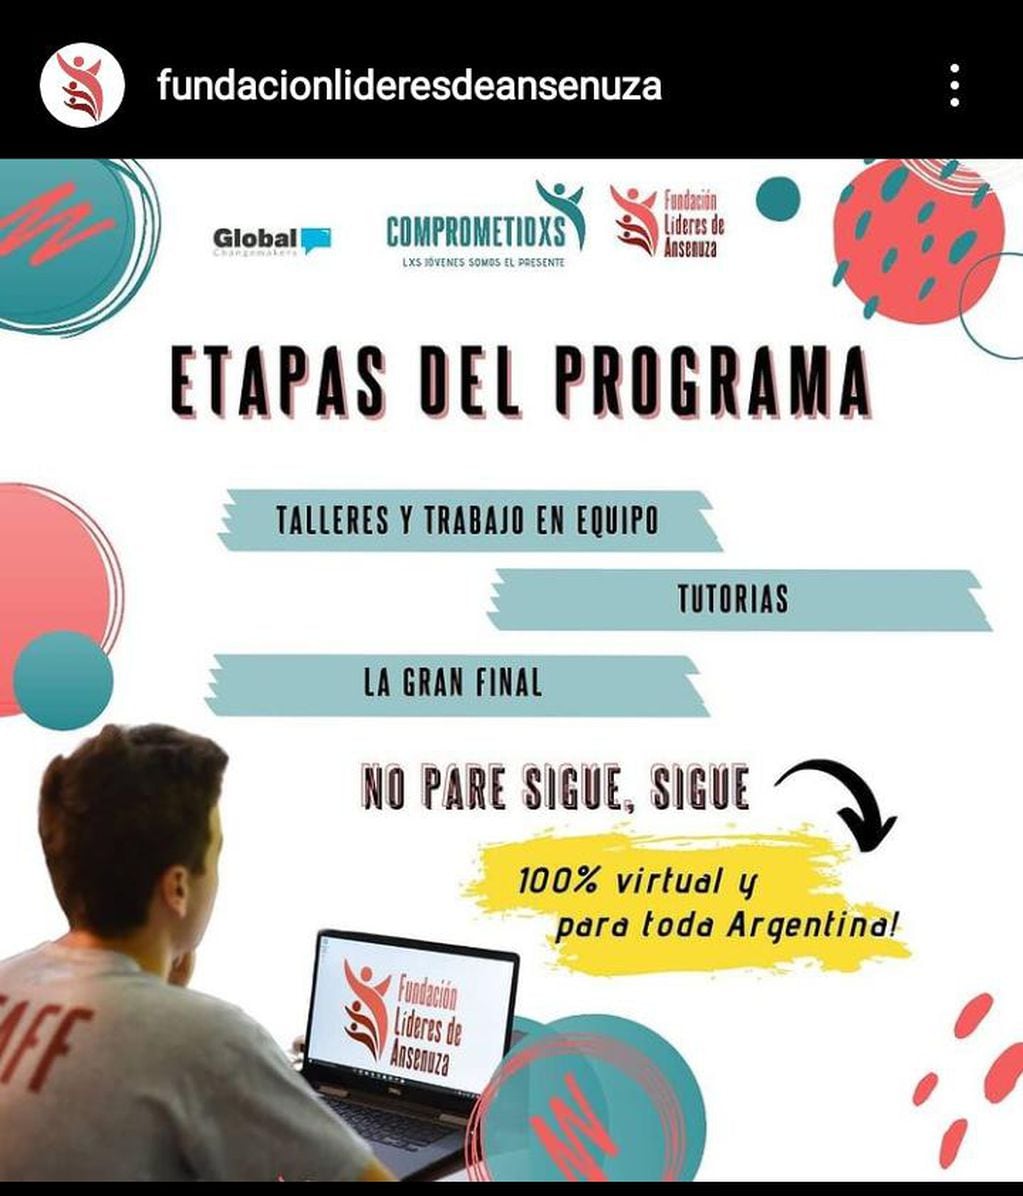 Etapas del programa "Comprometidxs" (Foto-captura, Instagram @FundaciónLÍderesdeAnsenuza)